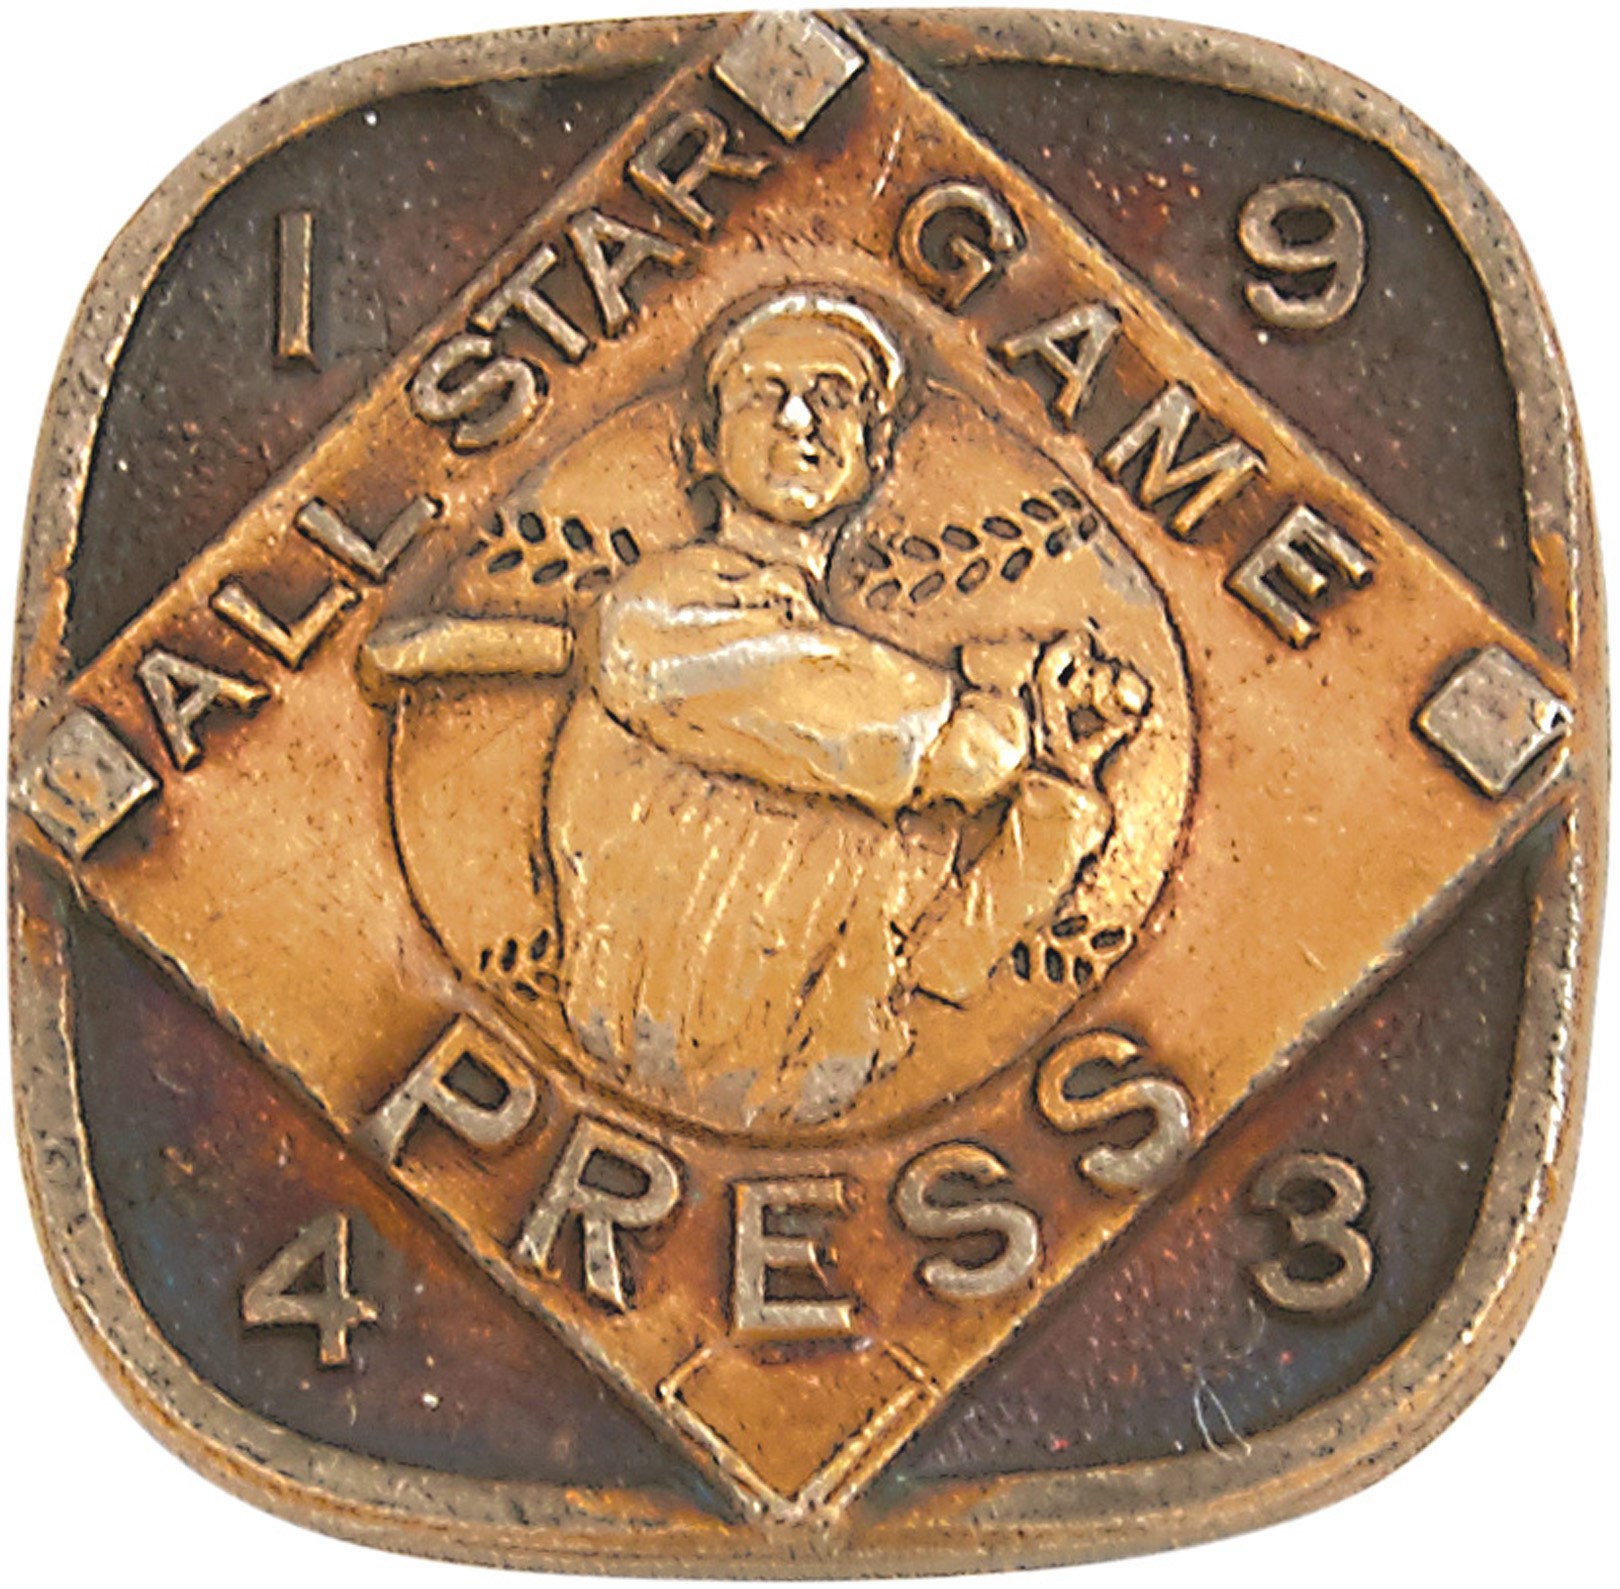 - 1943 All-Star Game Press Pin